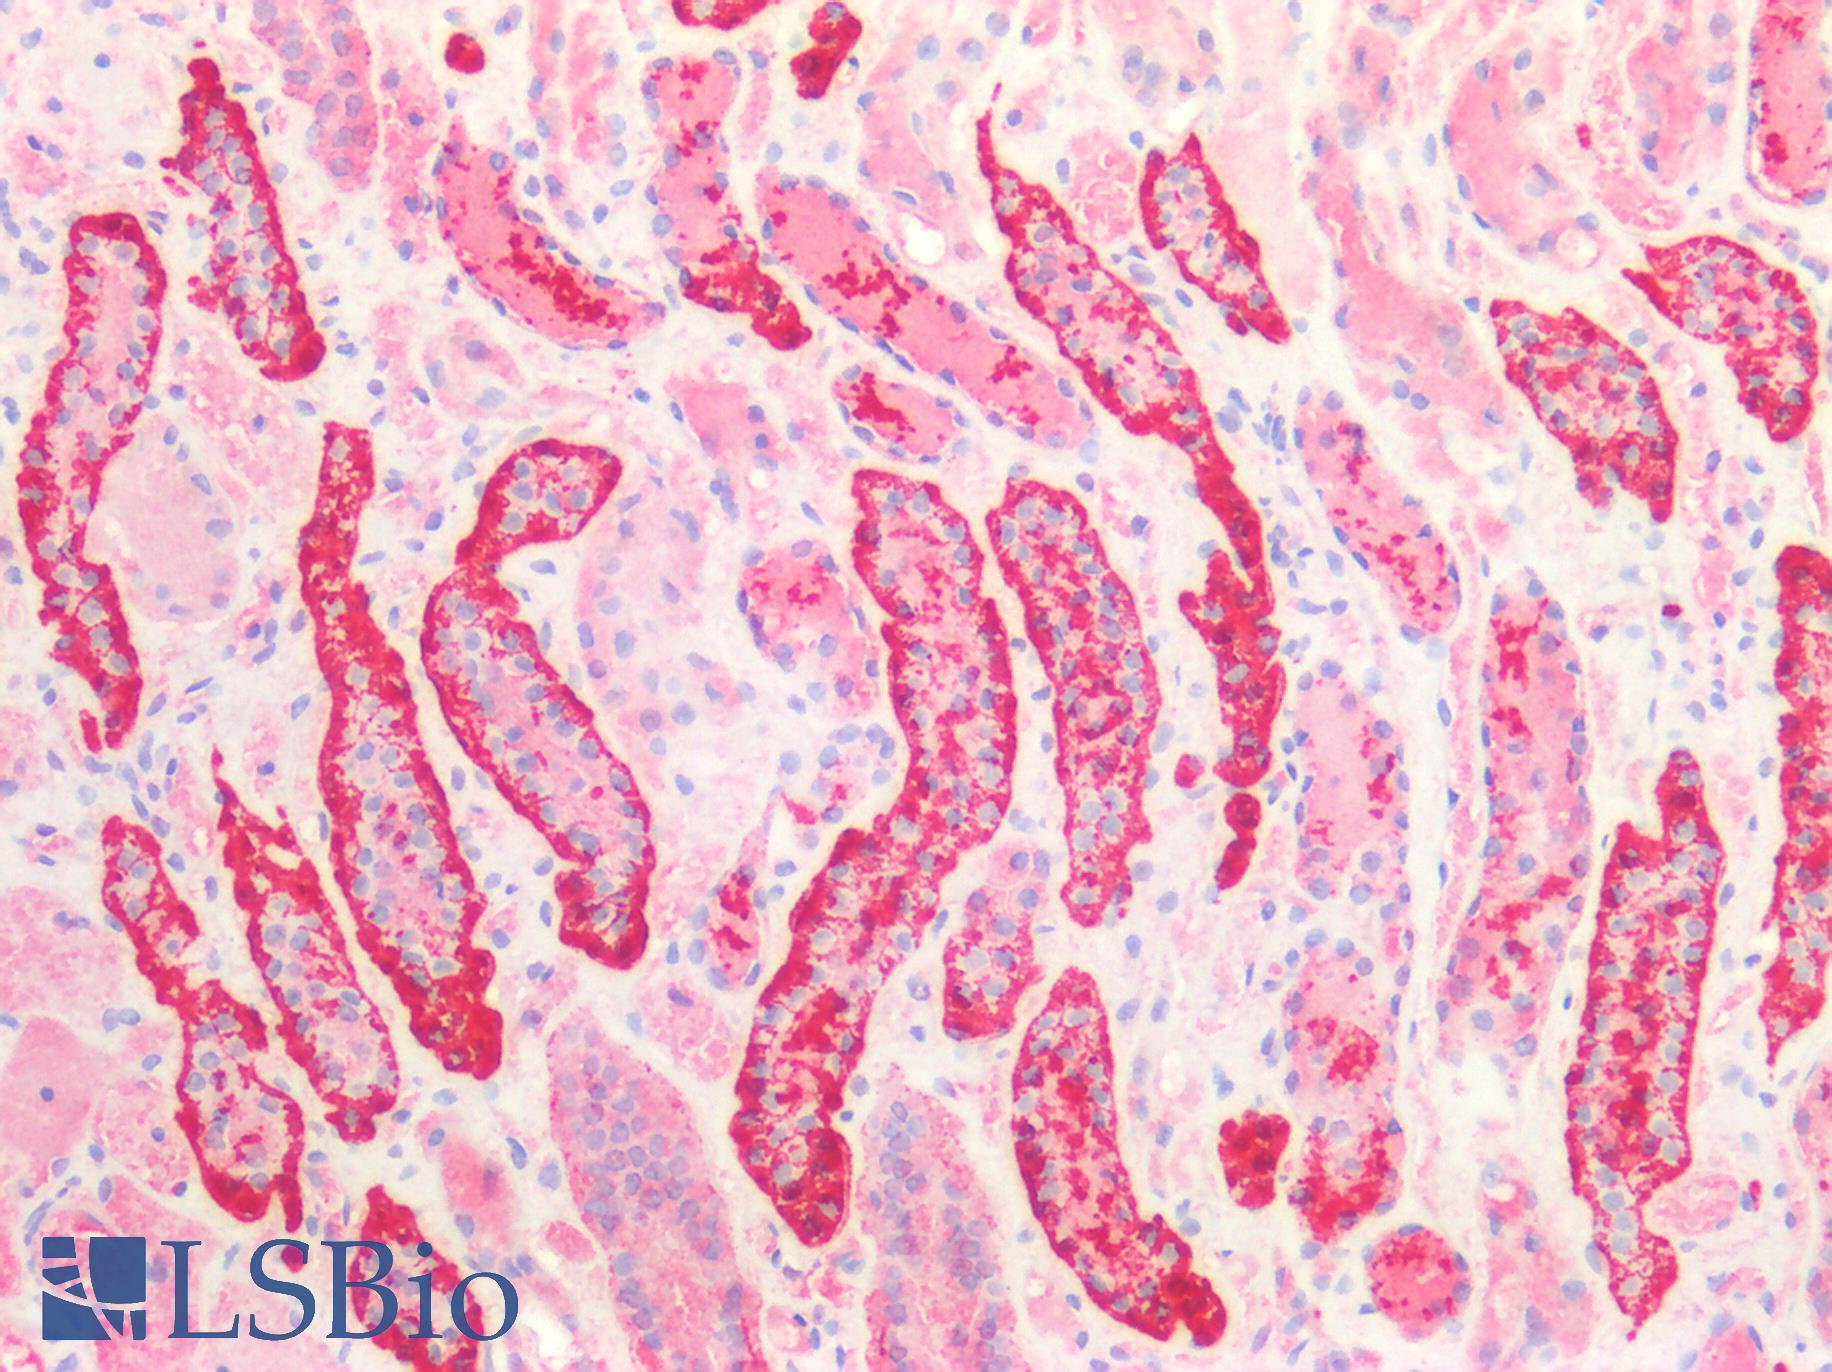 CDH16 / Cadherin 16 Antibody - Human Kidney: Formalin-Fixed, Paraffin-Embedded (FFPE)